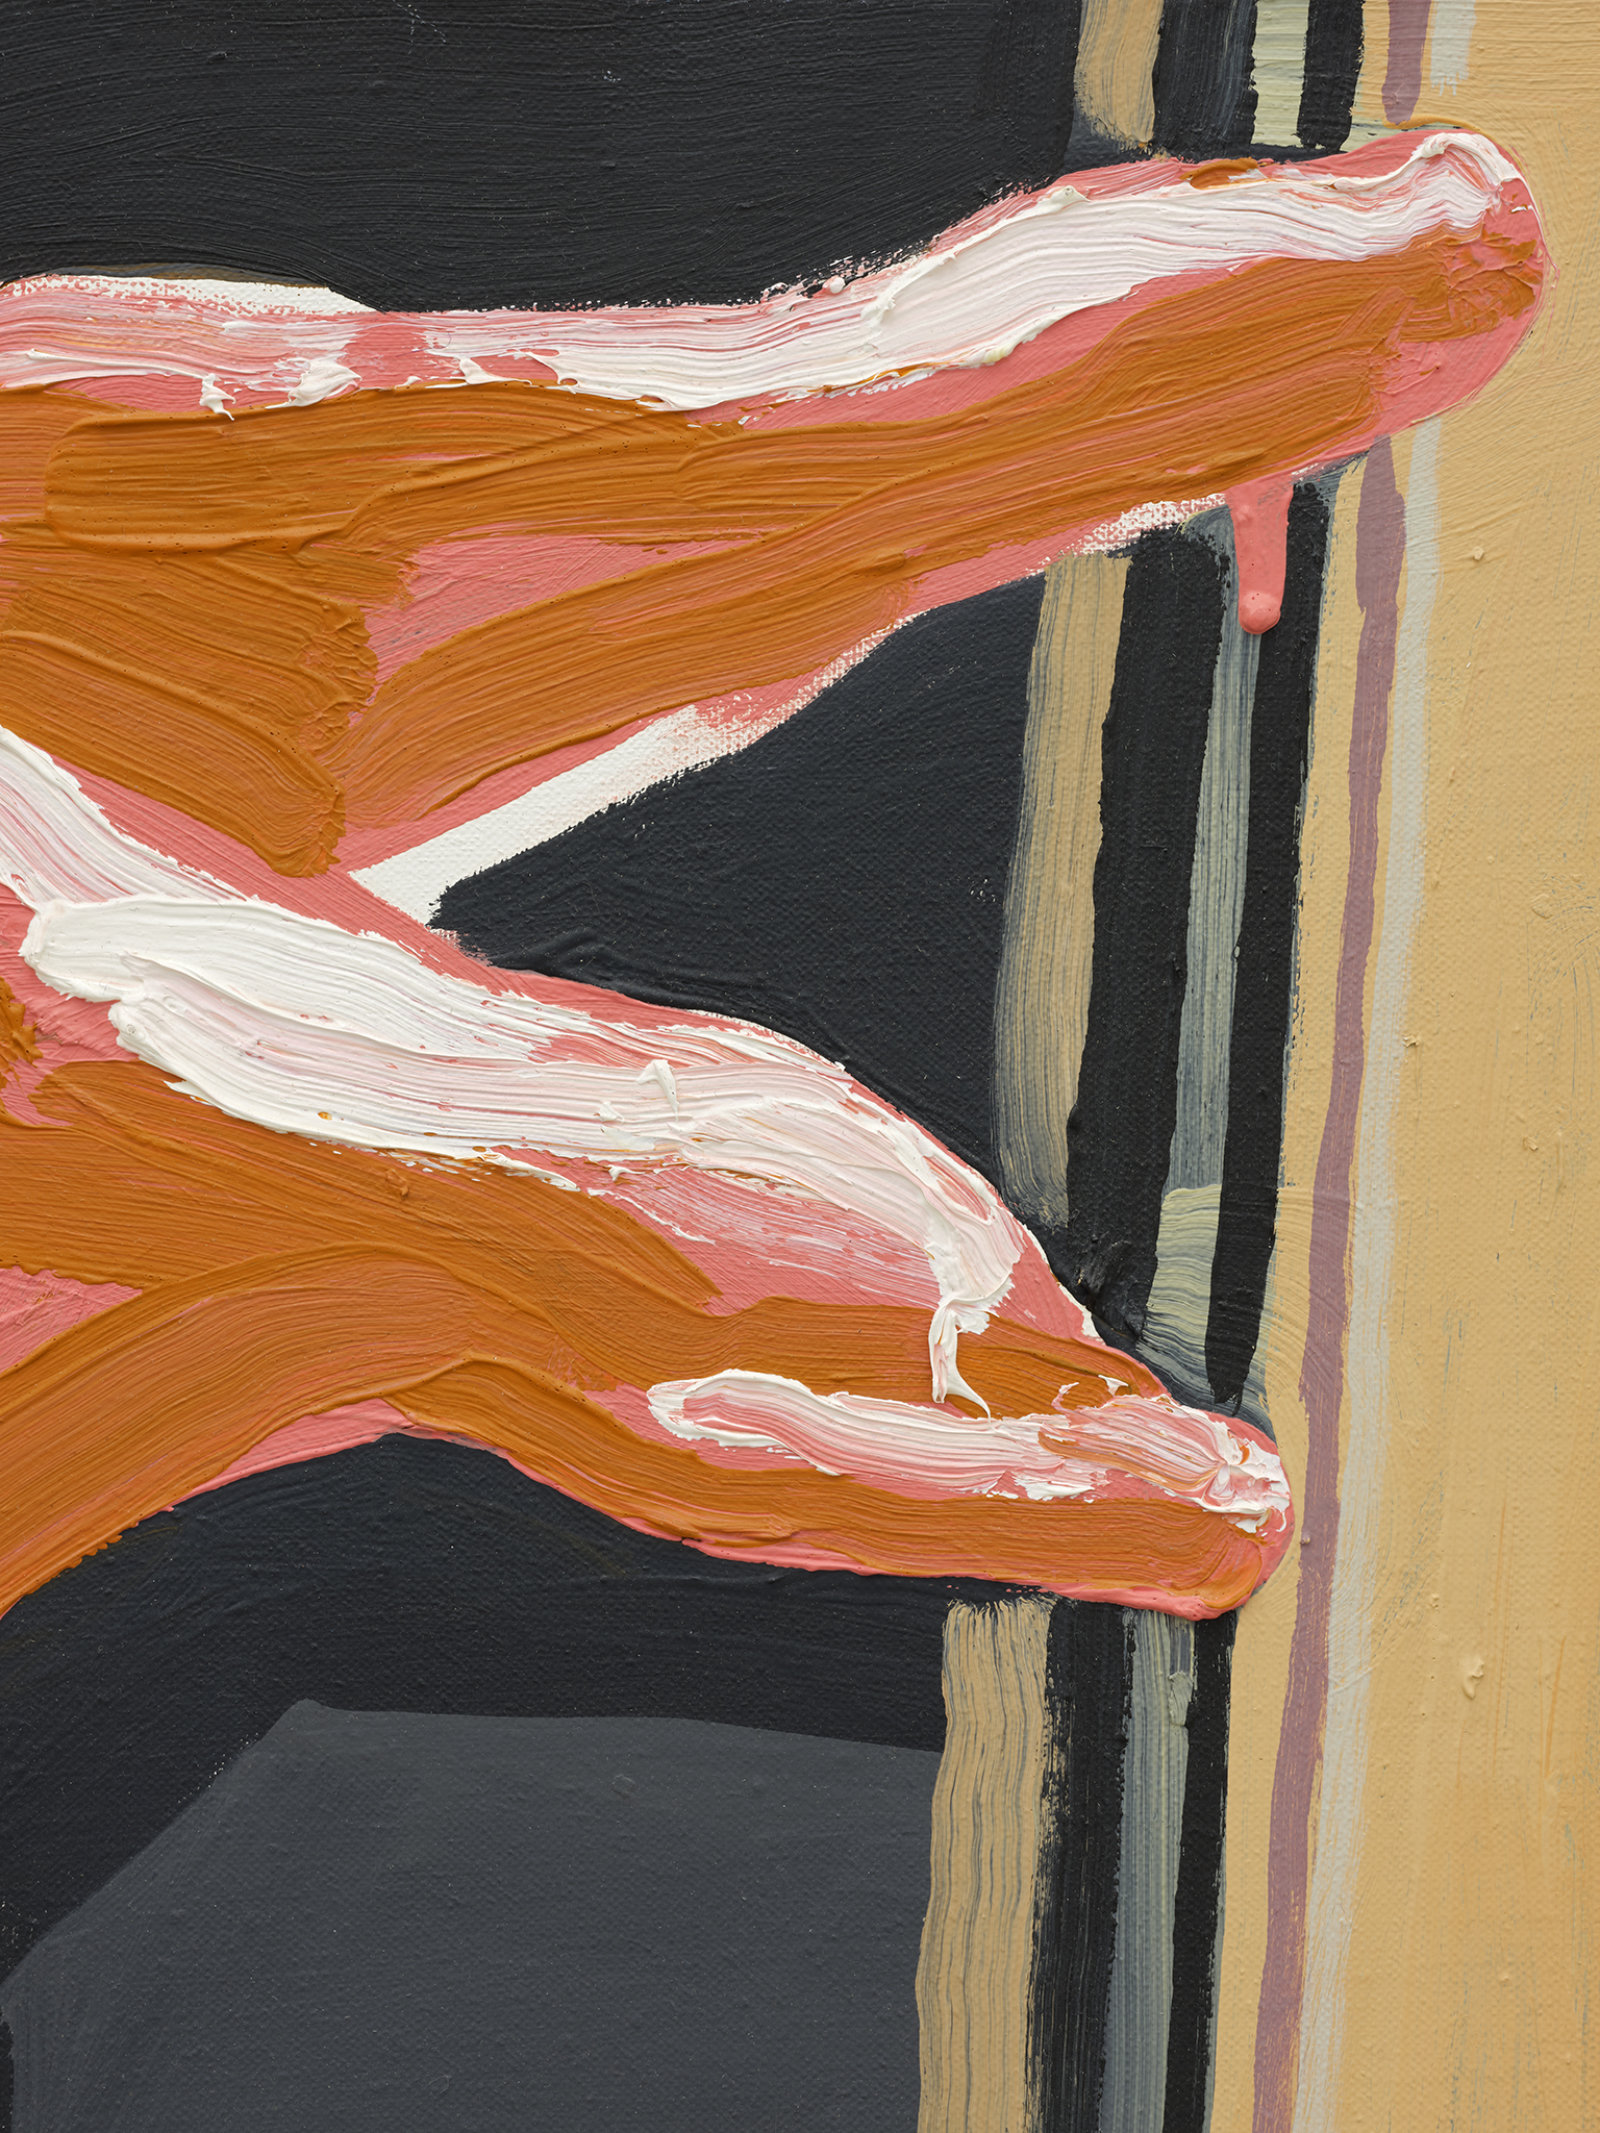 Damian Moppett, Figure Study for Acrobat in Bedroom (detail), 2008, oil on linen, 30 x 24 in. (76 x 61 cm)